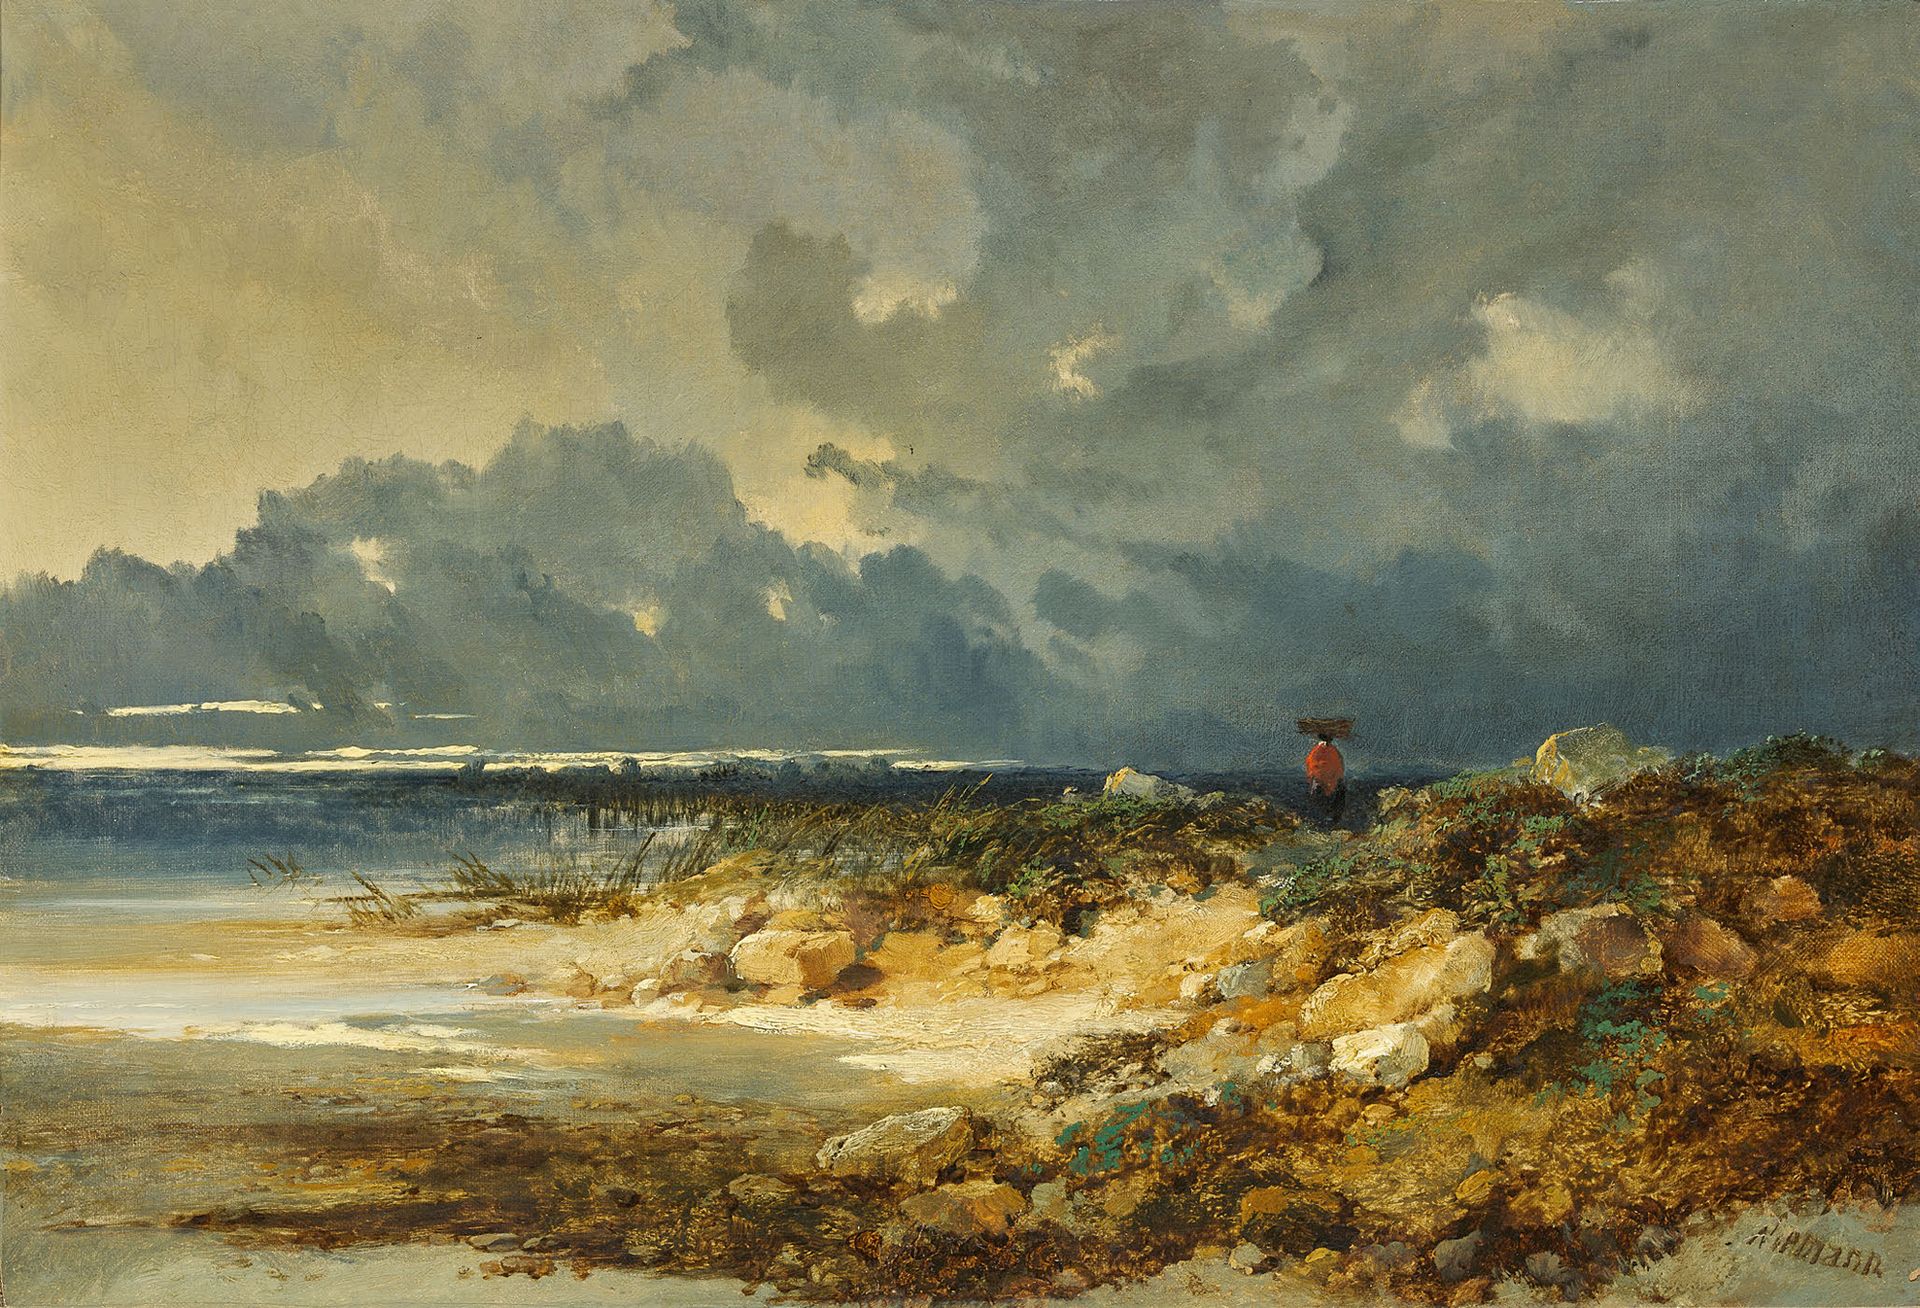 EDMUND JOHN NIEMANN LONDRES, 1813 - 1876 海边
布面油画
签名右下：NIEMANN 
33,6 x 48,6 cm

出&hellip;